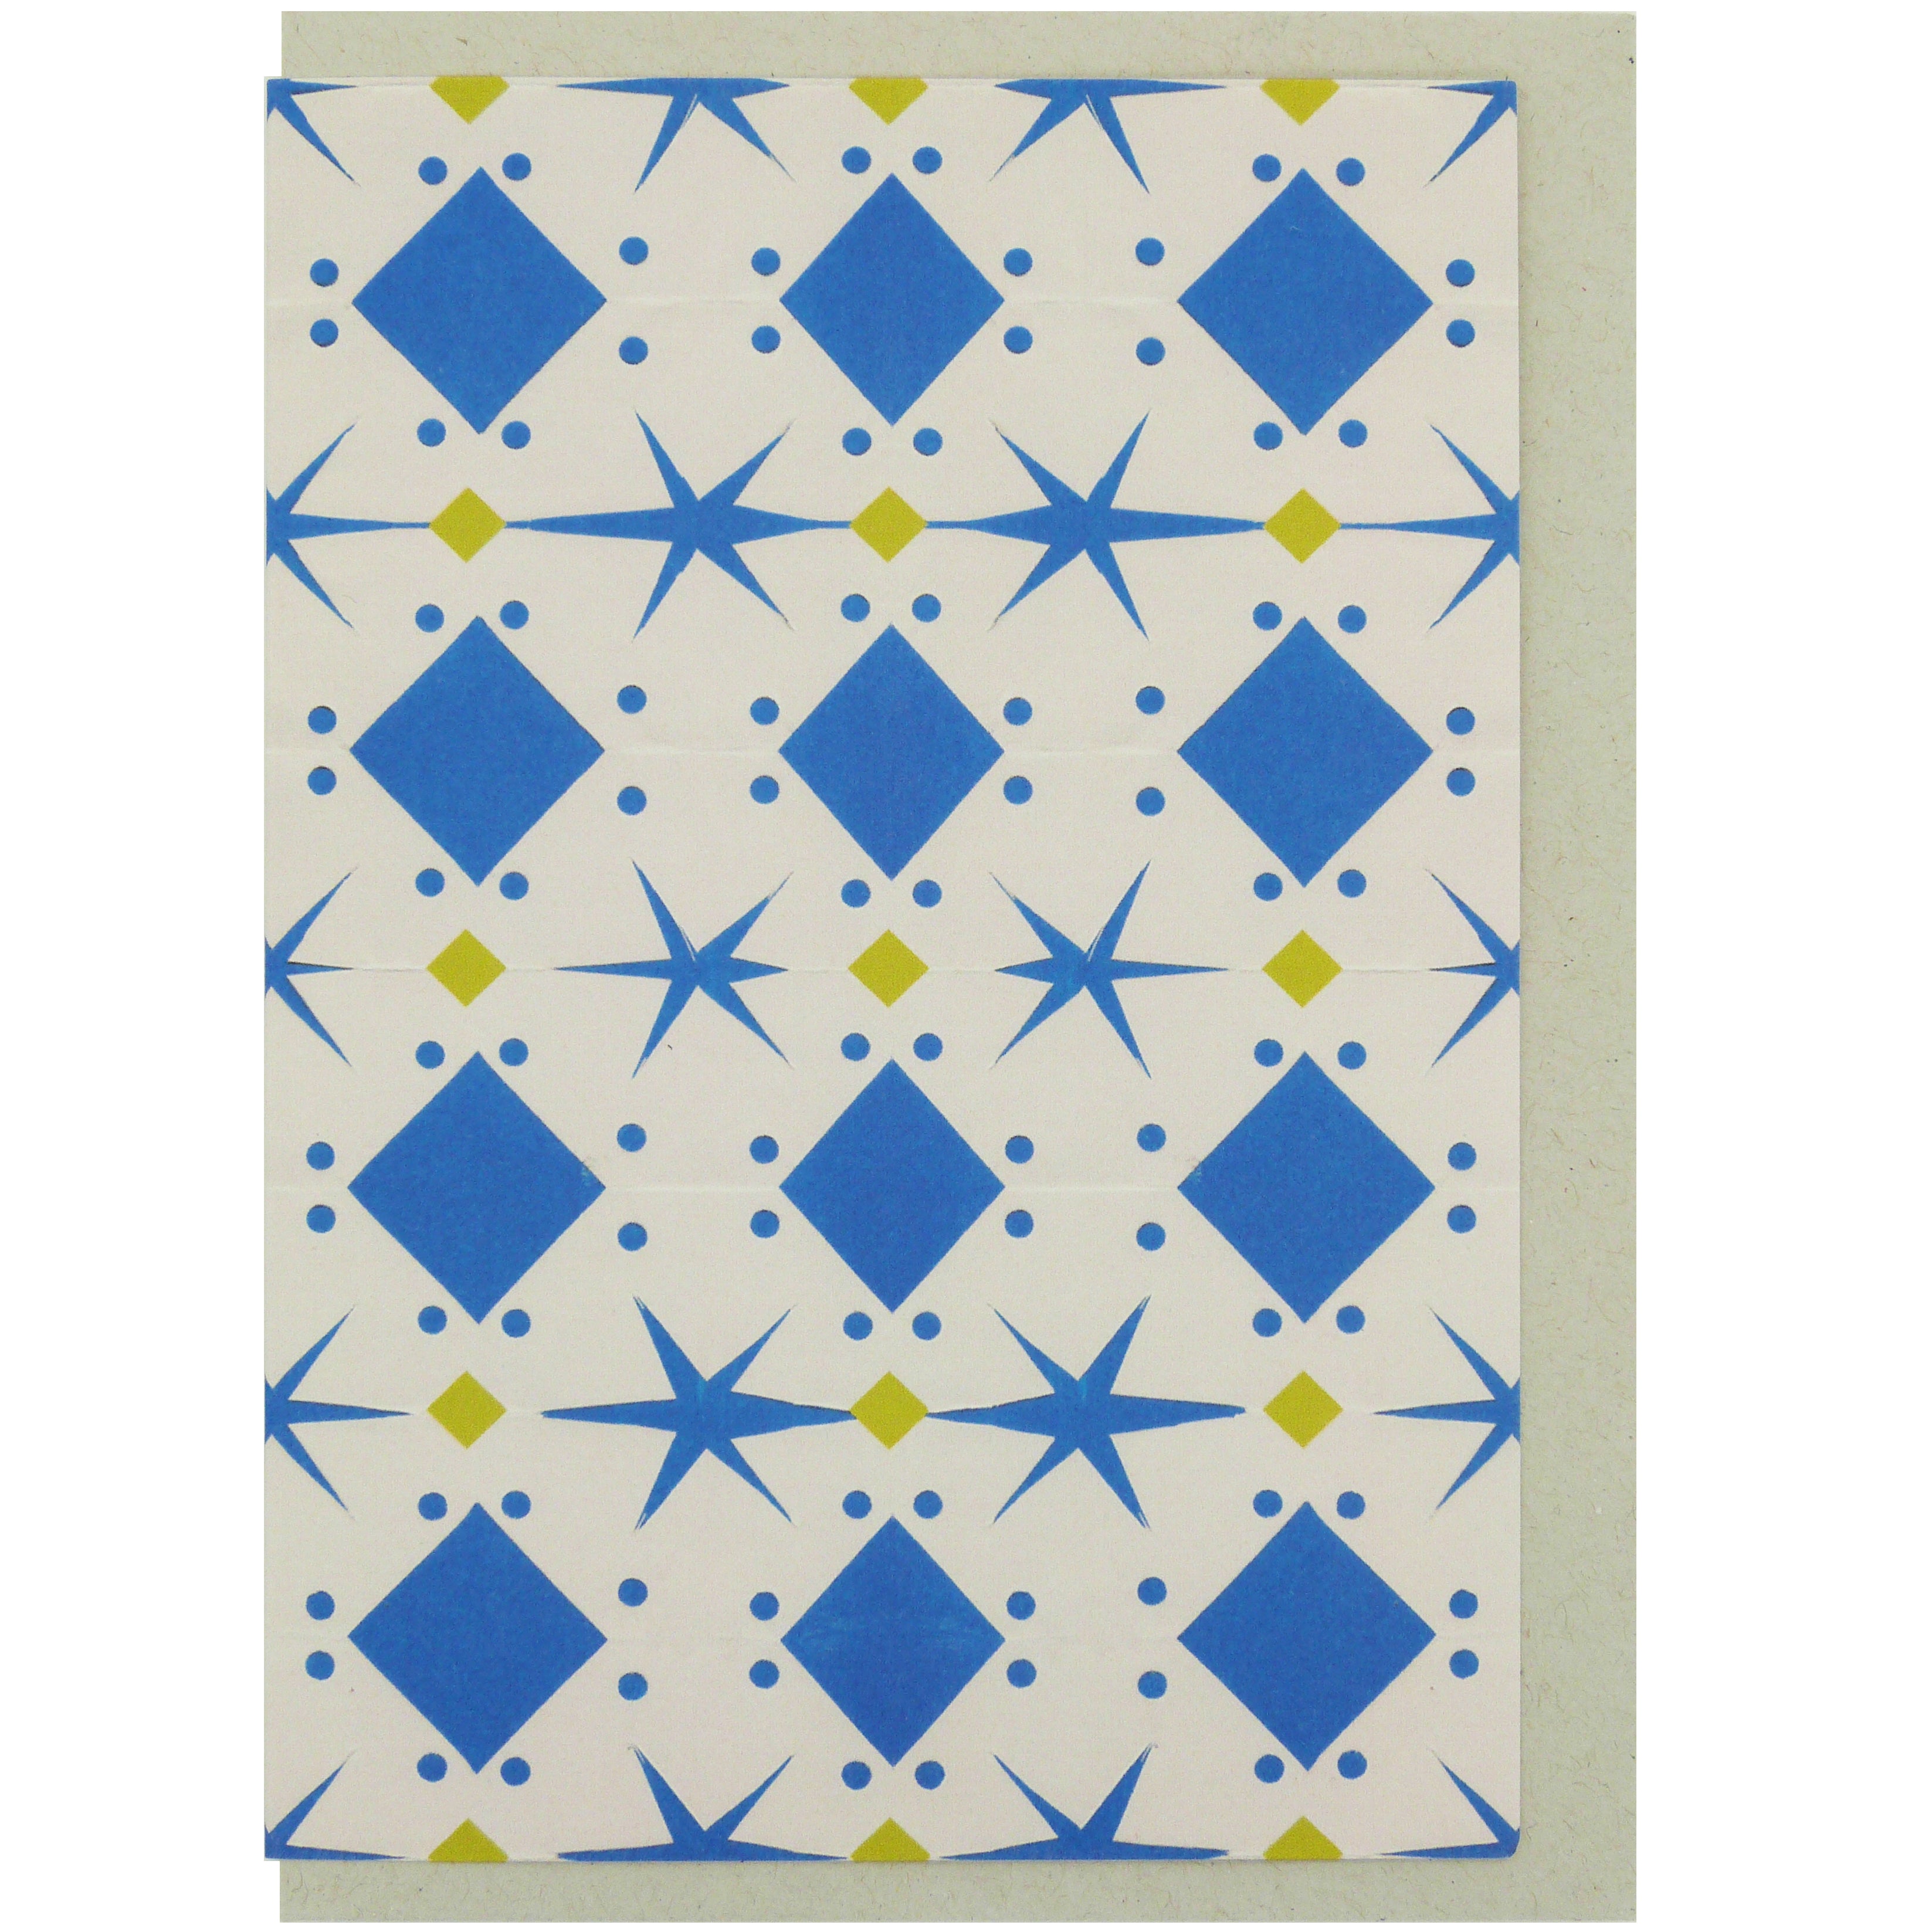 Hadley Paper Goods Hadley x Kettle's Yard Blue Star Pattern Greetings Card 1